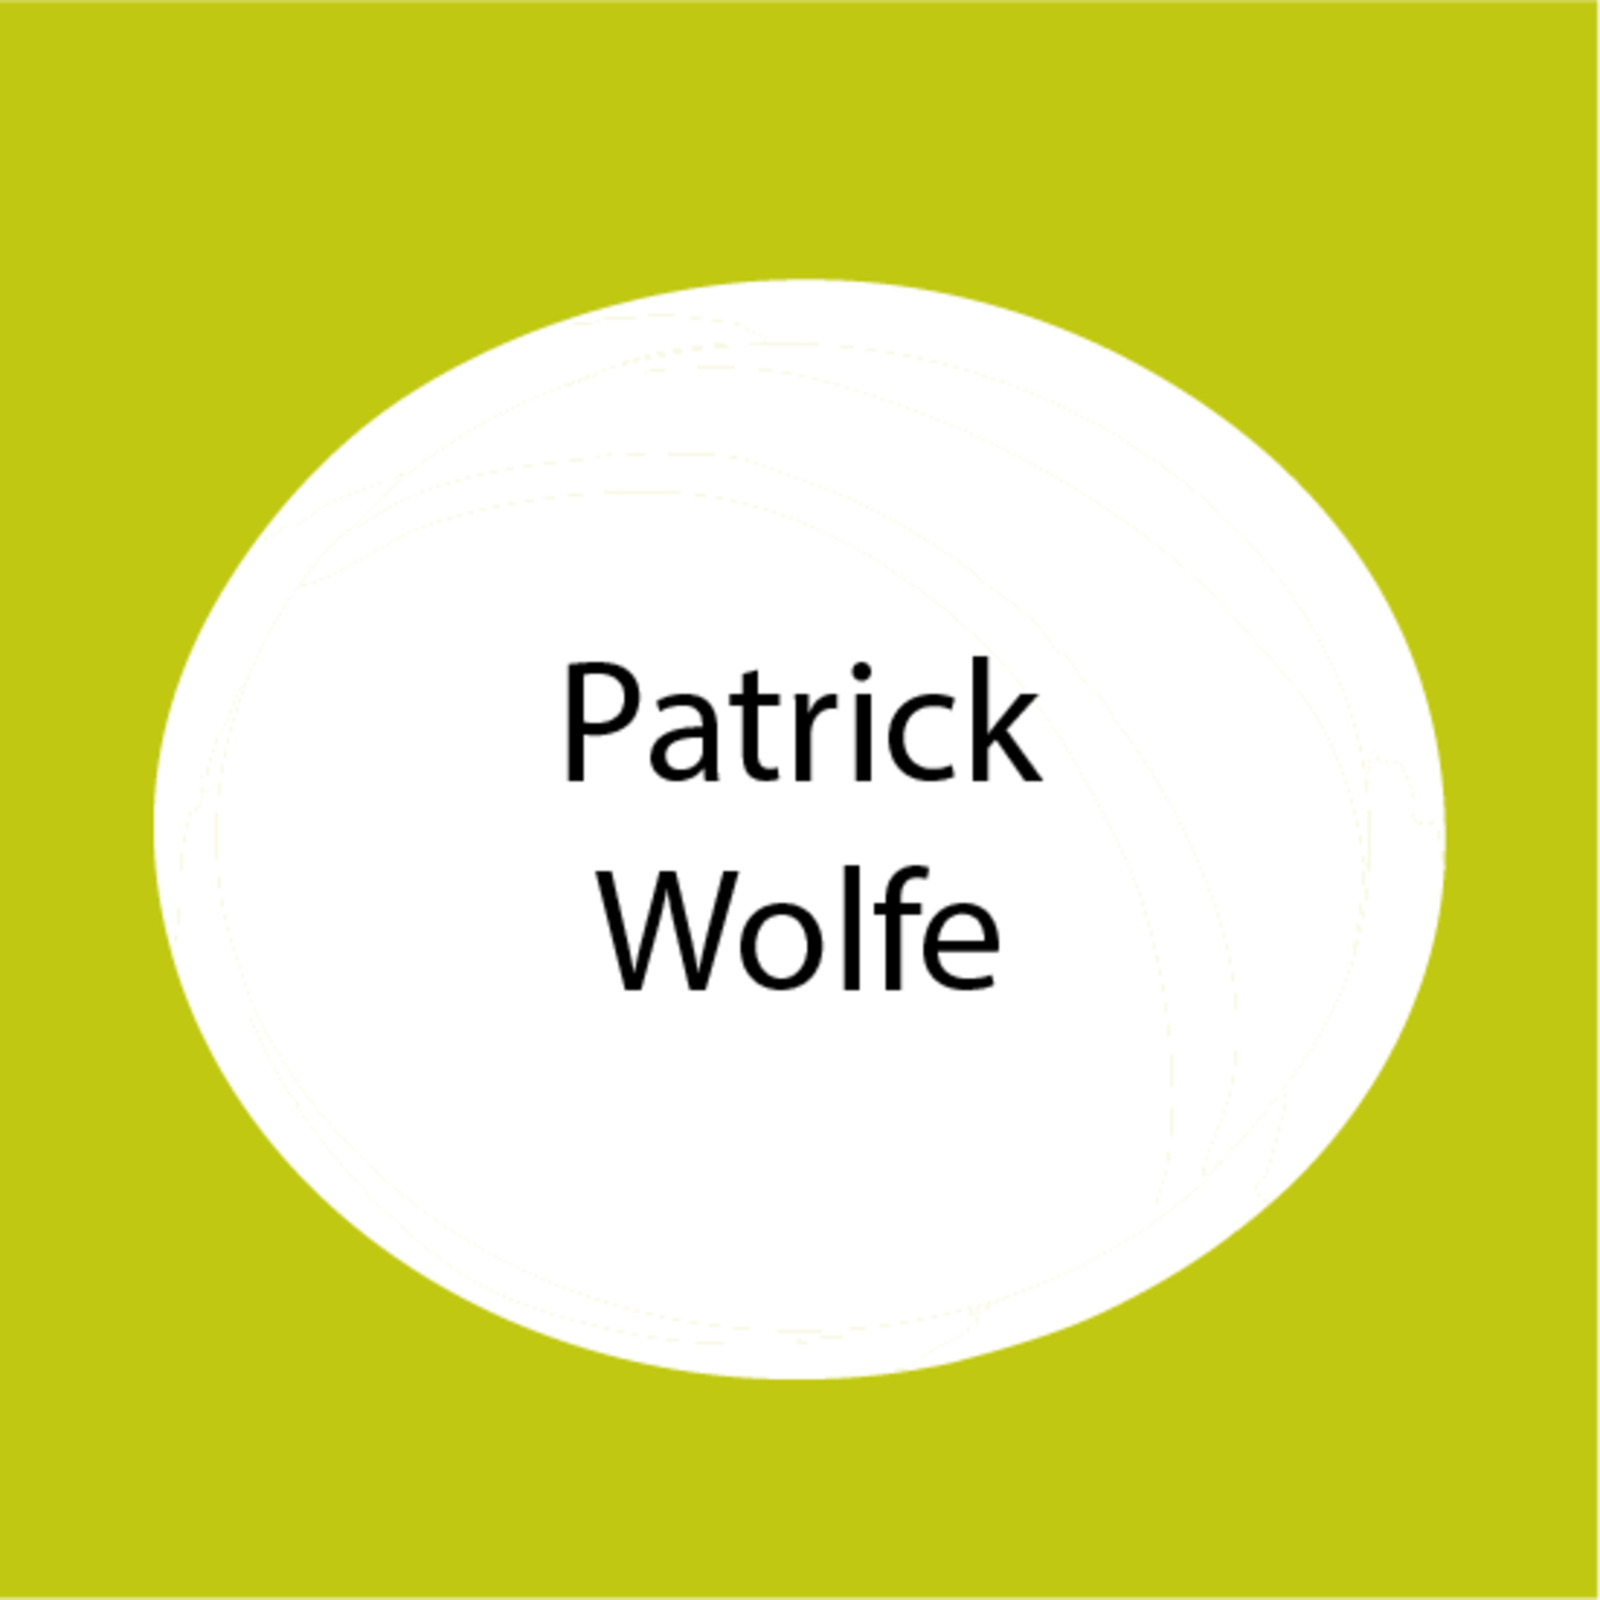 Patrick Wolfe